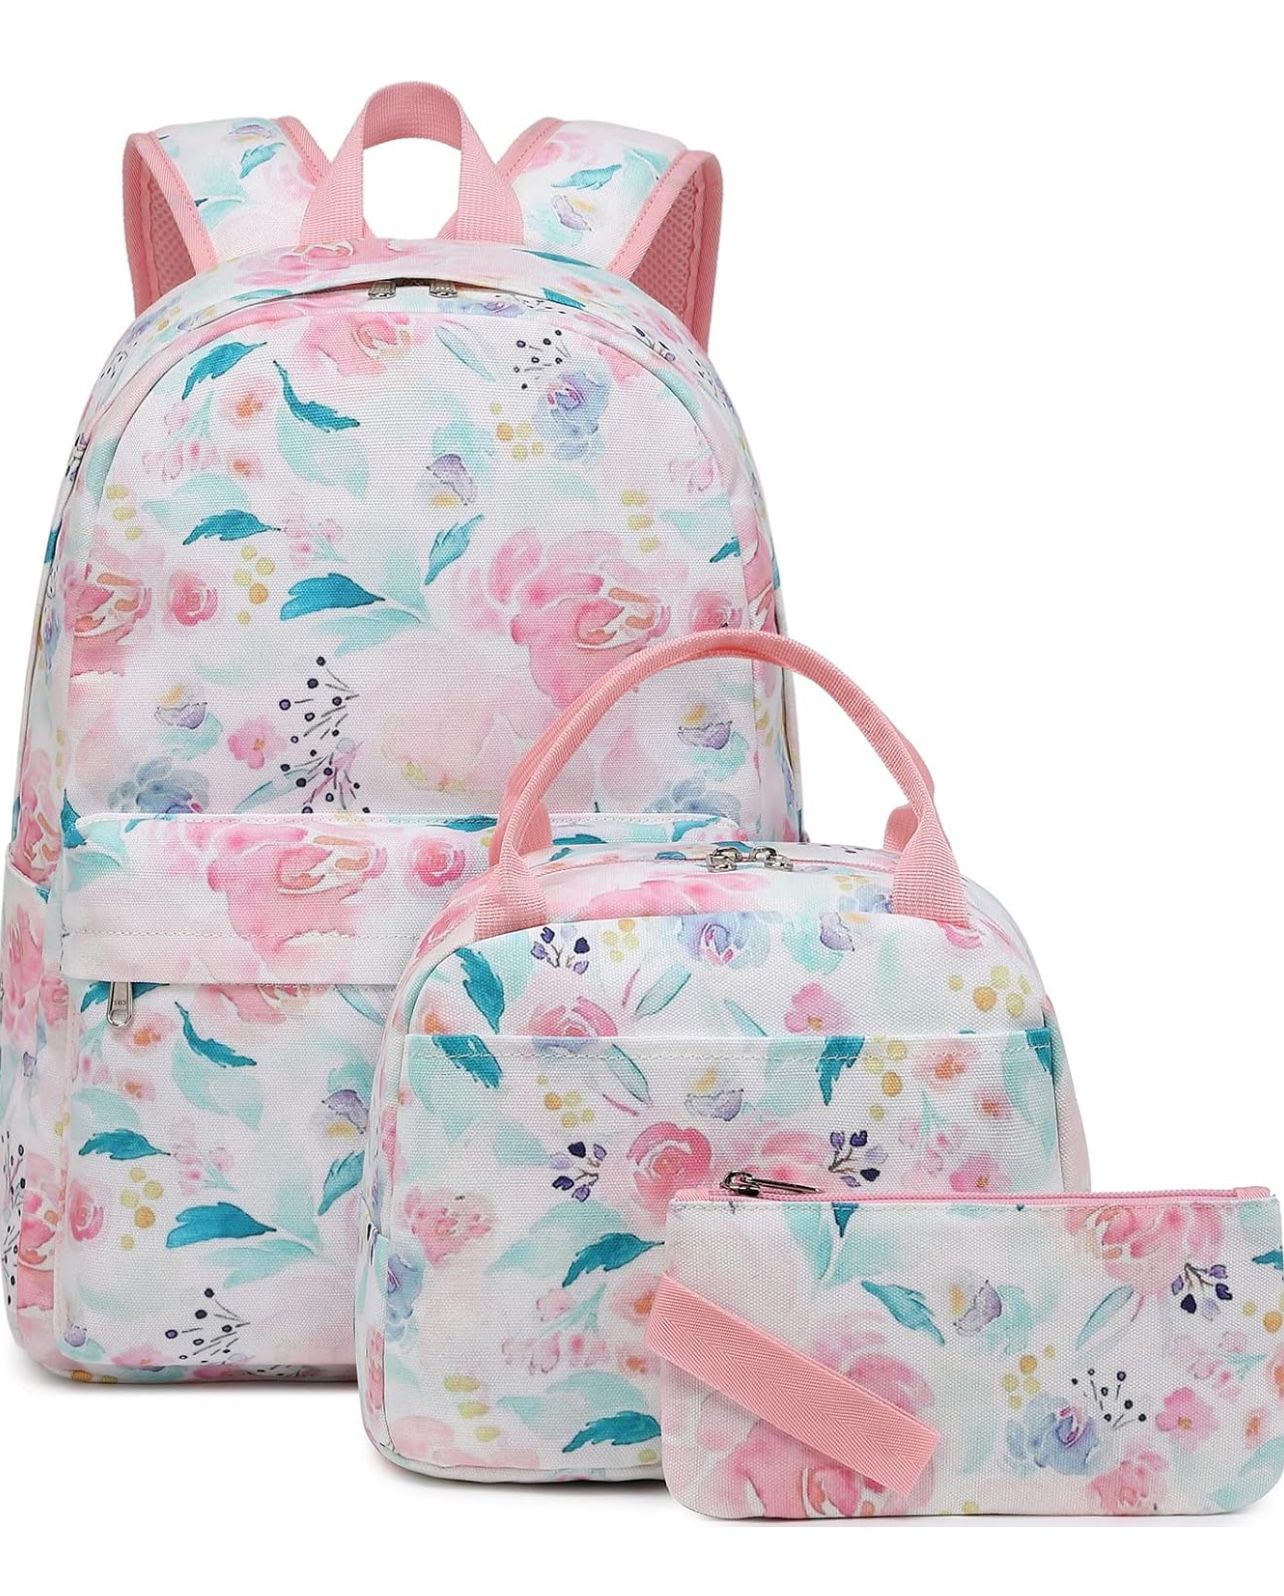 Brandnew Teen Girls School Backpack Flowers Backpack for Girls Water Resistant Kids Backpack Bookbag Elementary School Bag Set